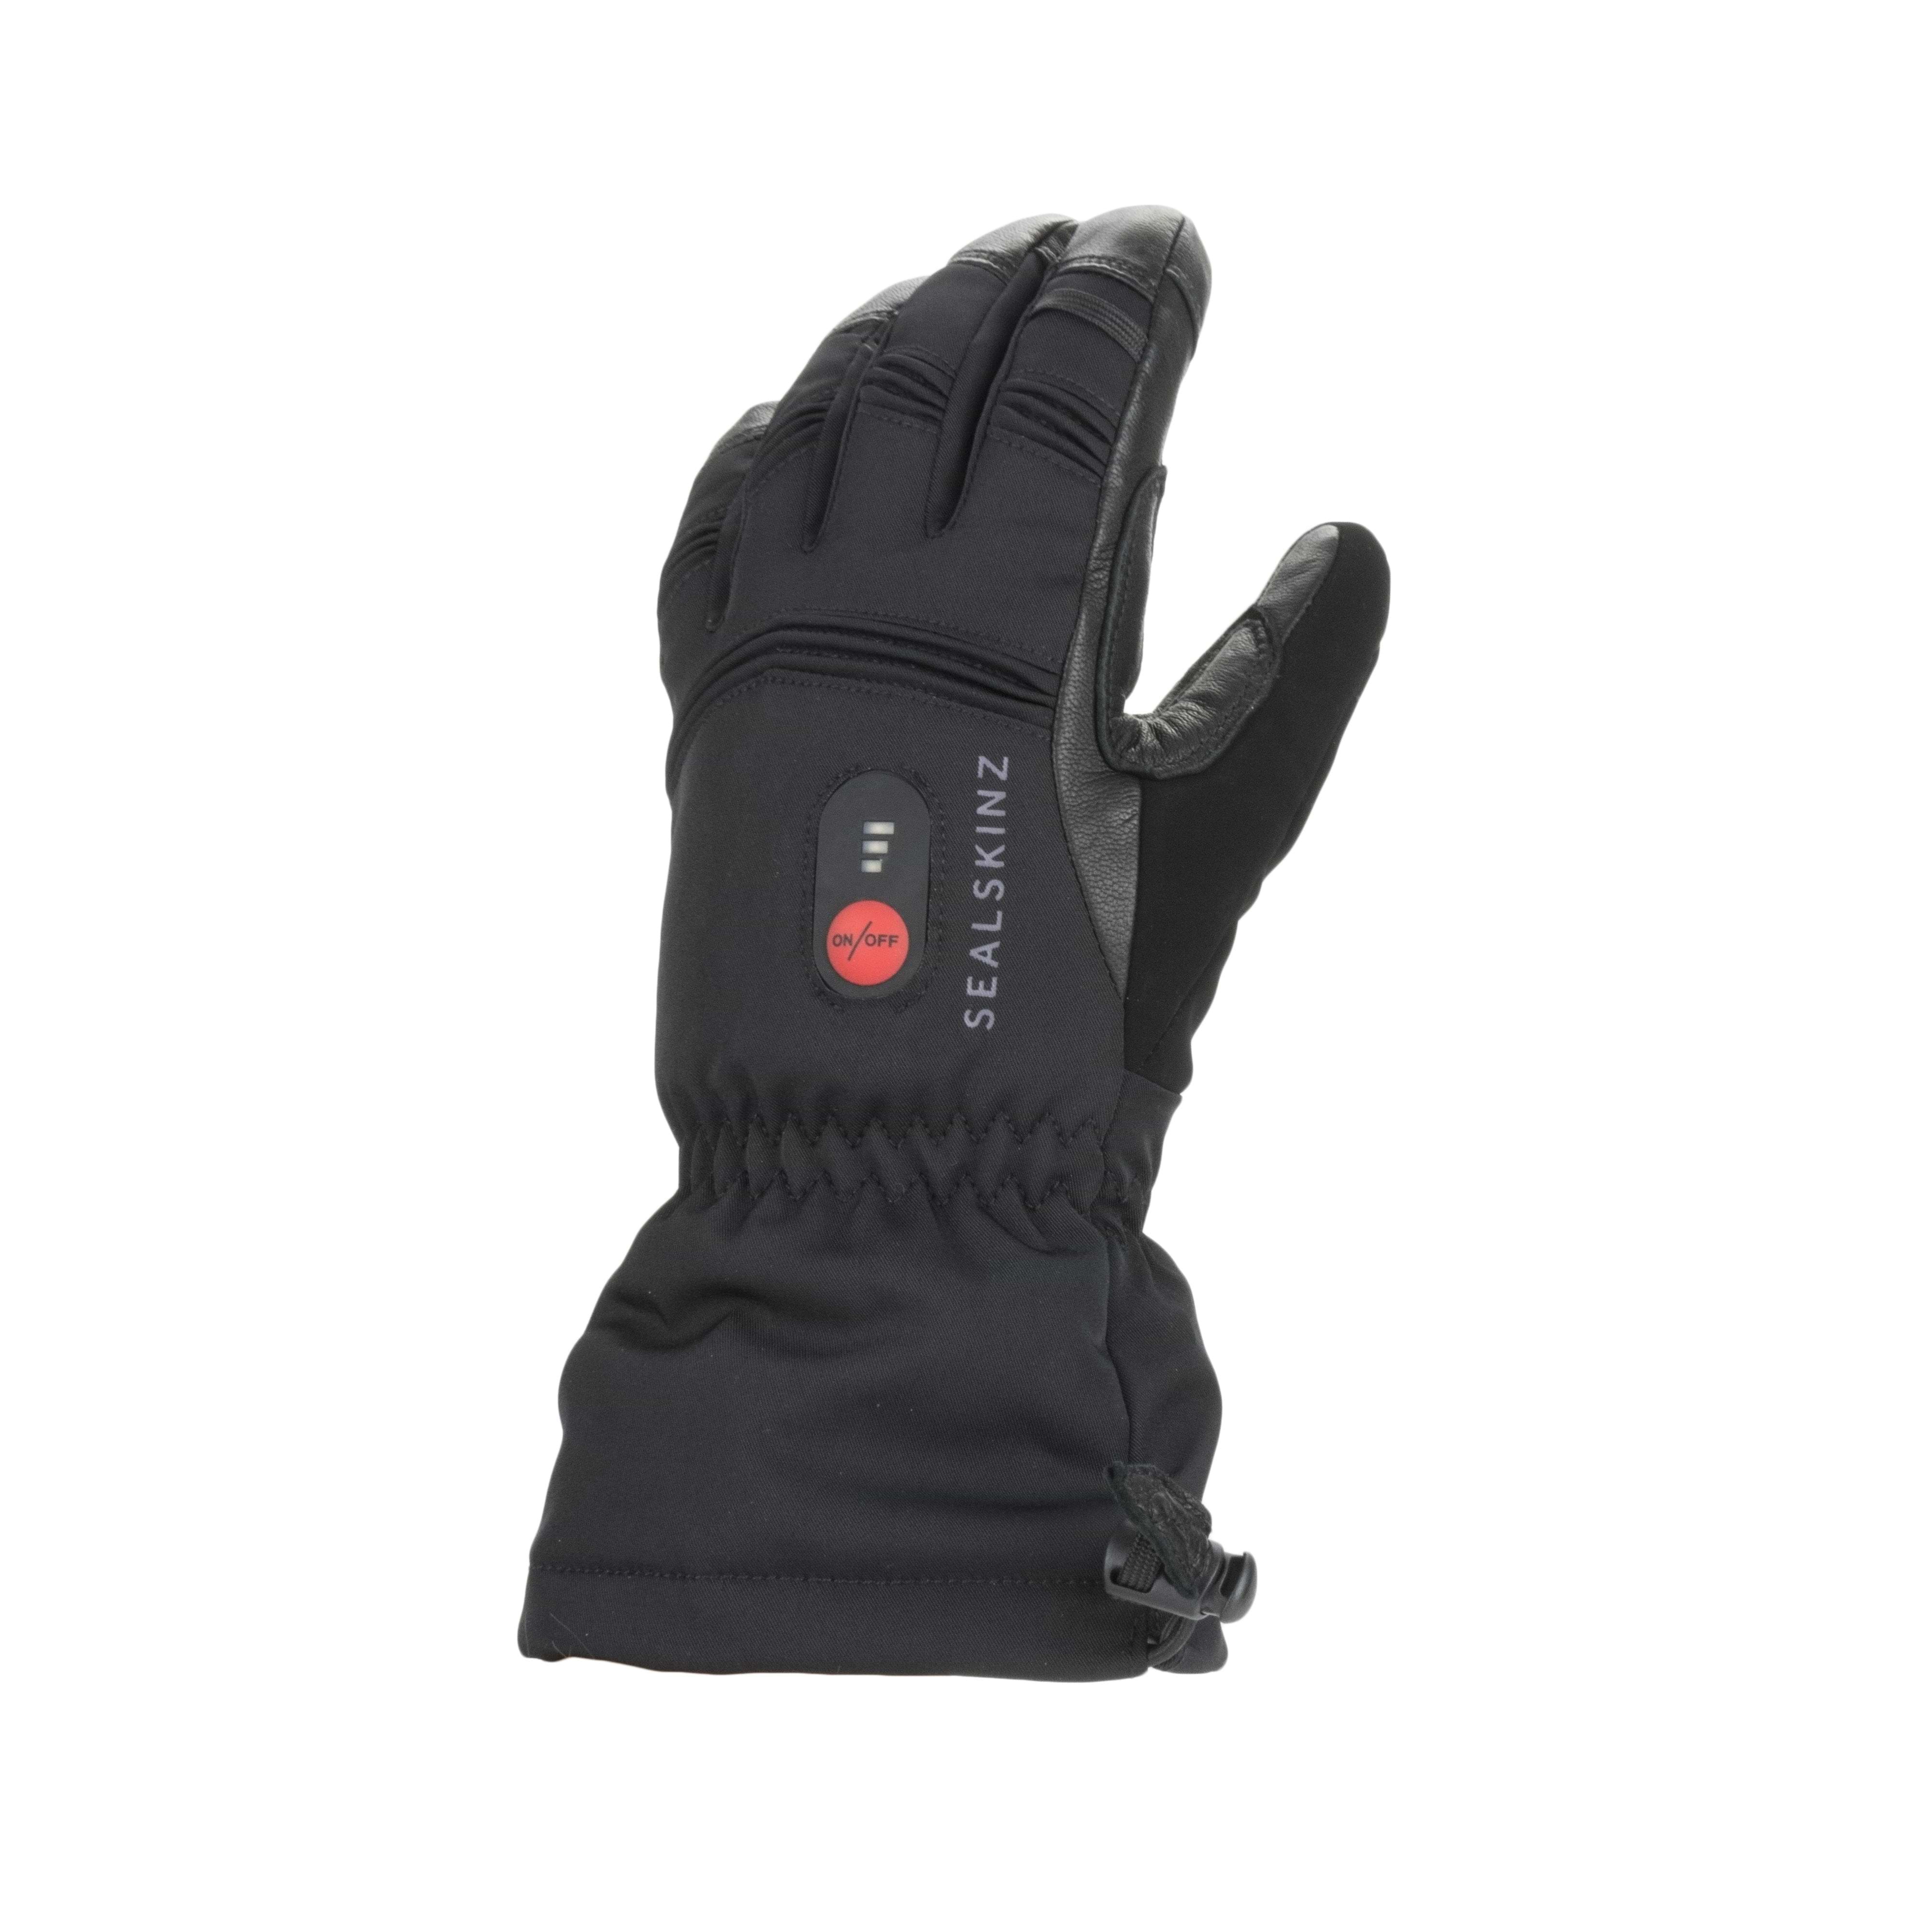 KastKing IceRiver Fishing Gloves 100% Waterproof Cold Winter Weather  Fishing Gloves for Winter Fishing and